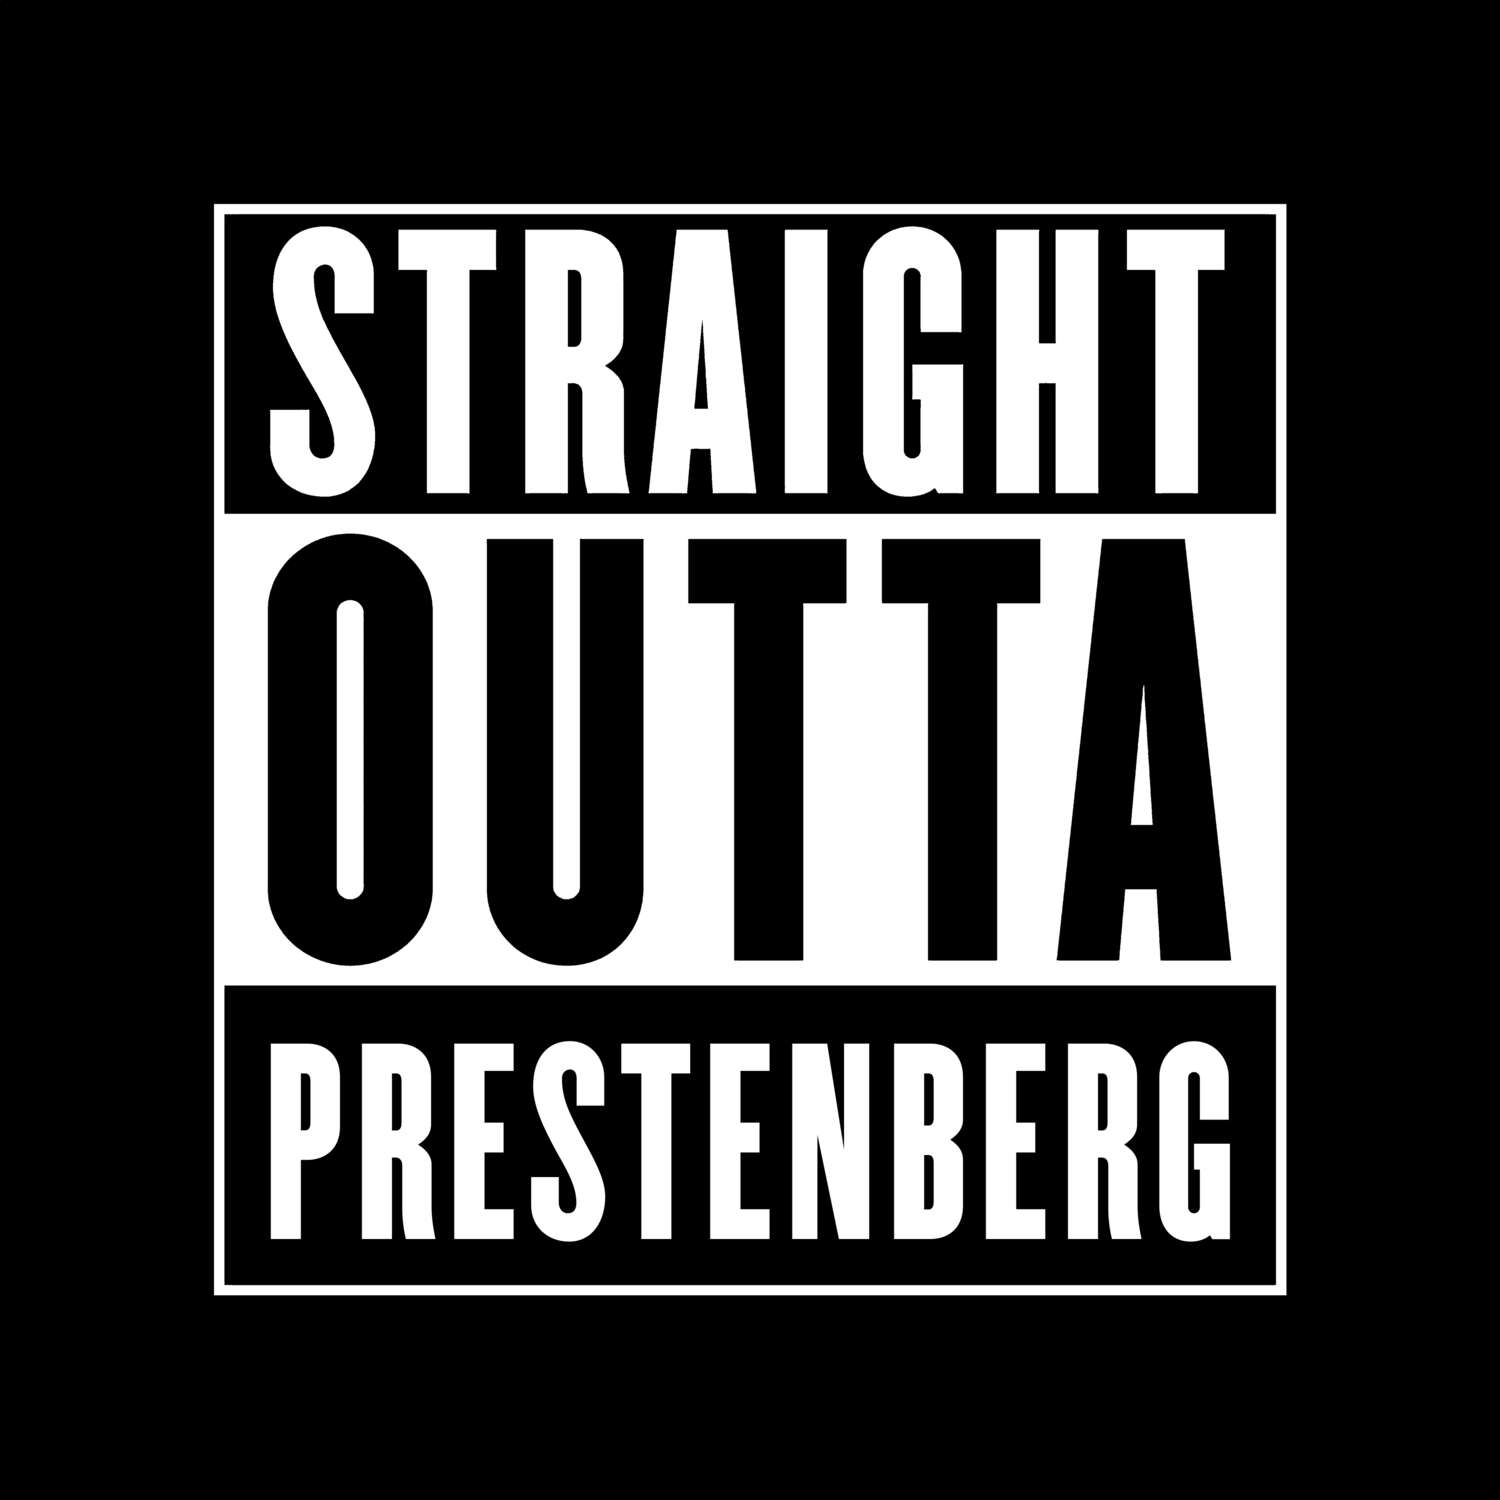 Prestenberg T-Shirt »Straight Outta«